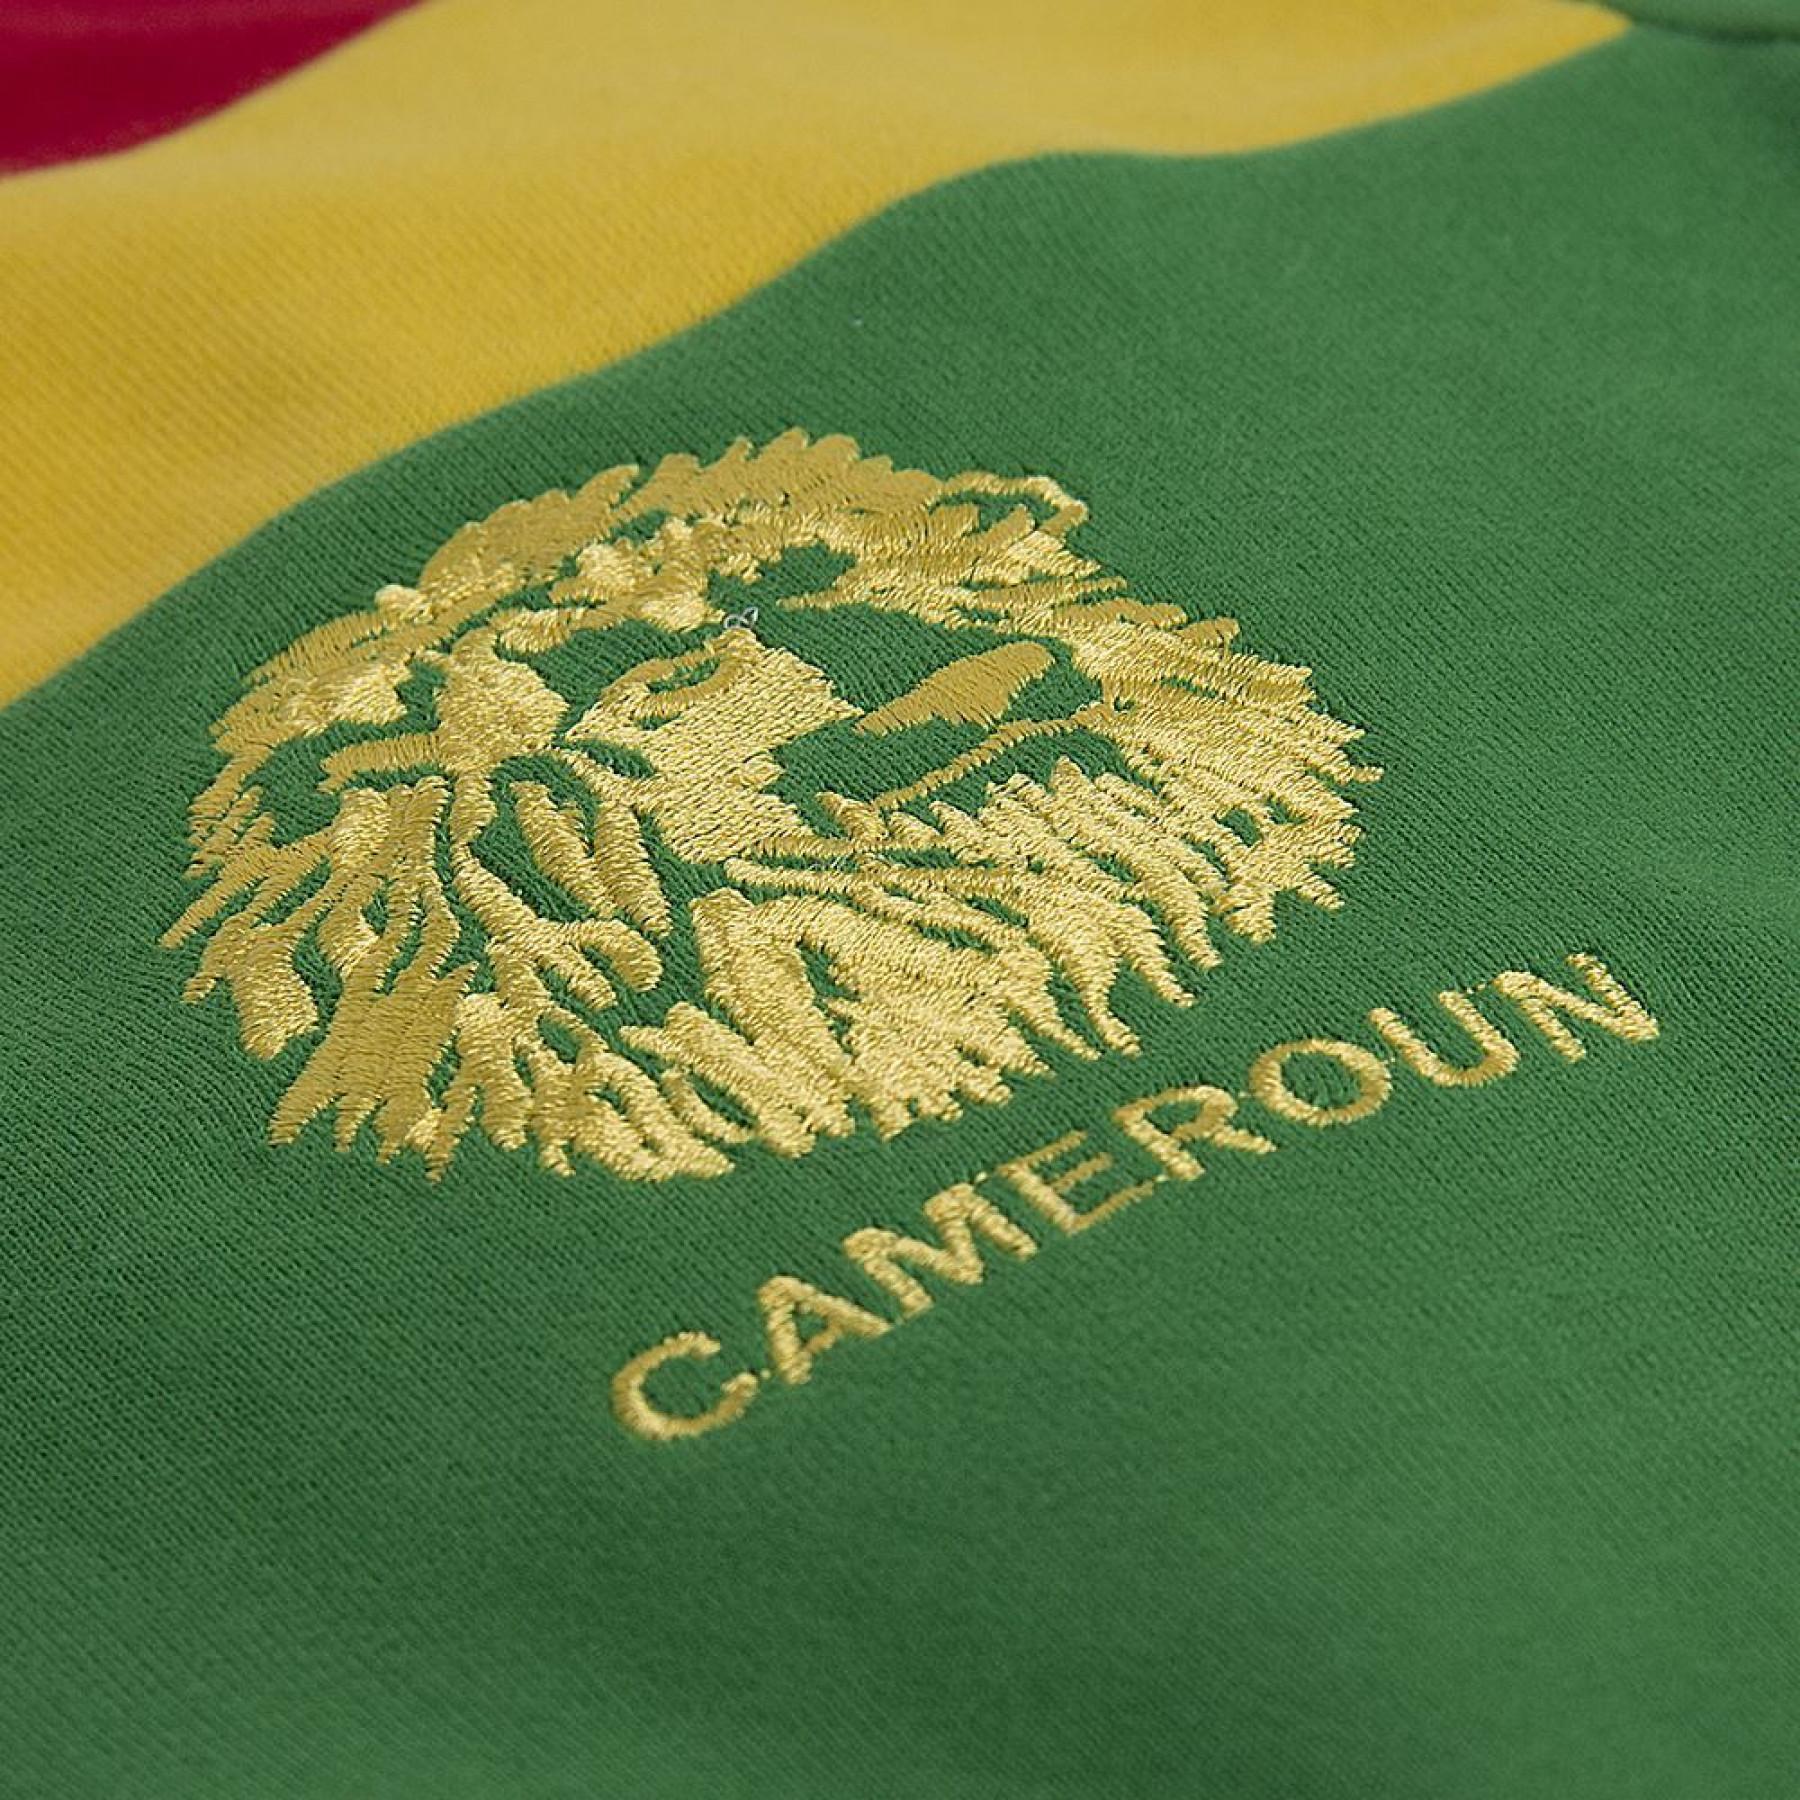 Home jersey Cameroun 1989